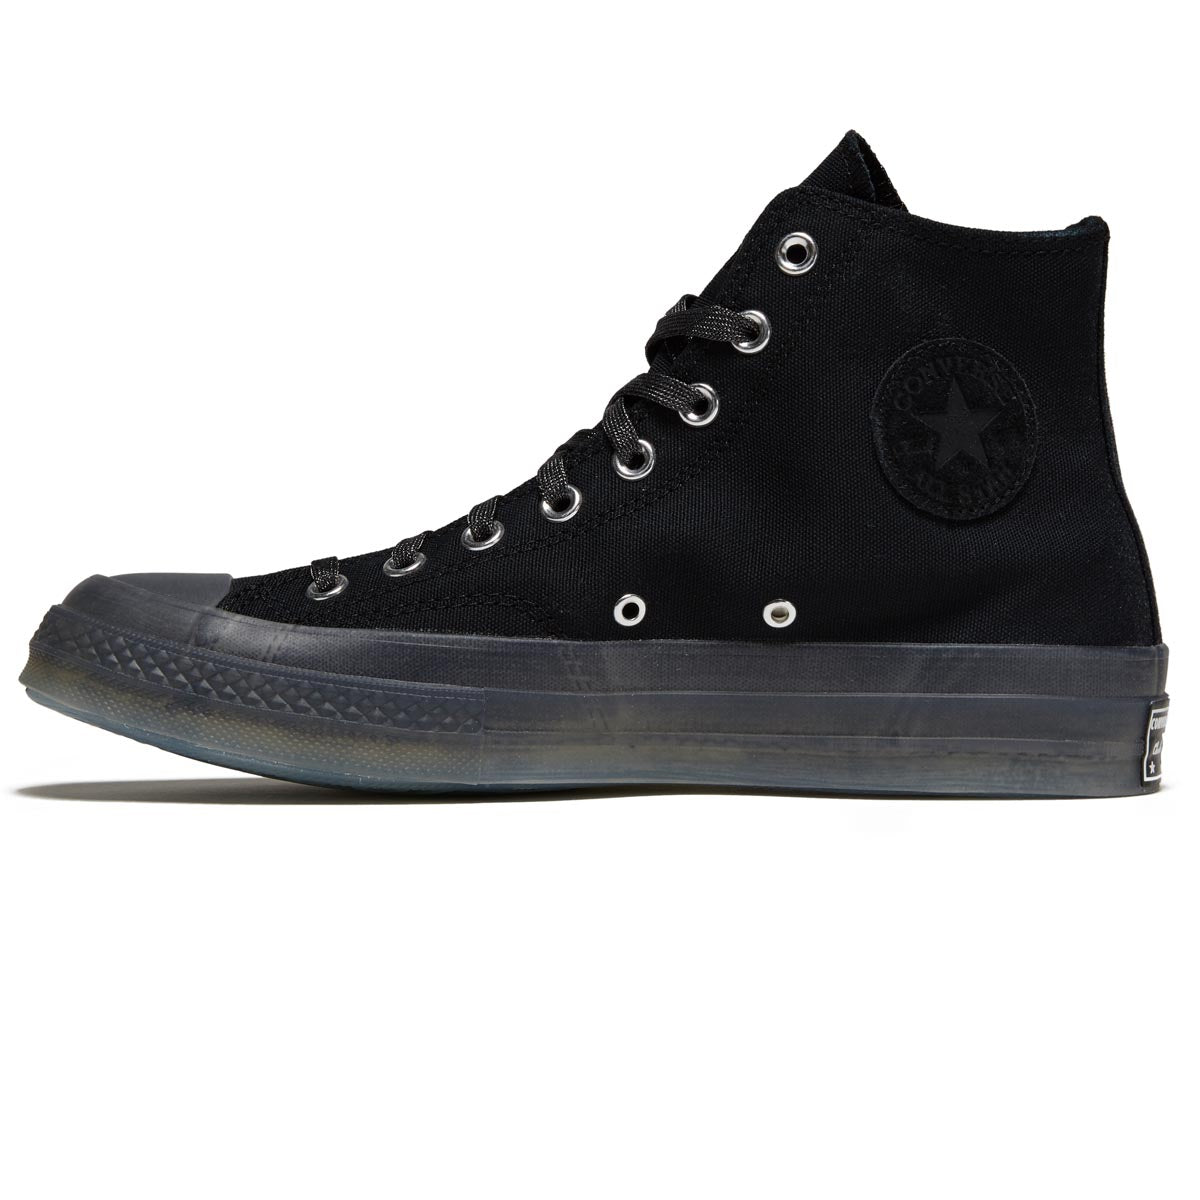 Converse x Turnstile Chuck 70 Hi Shoes - Black/Grey/White image 2